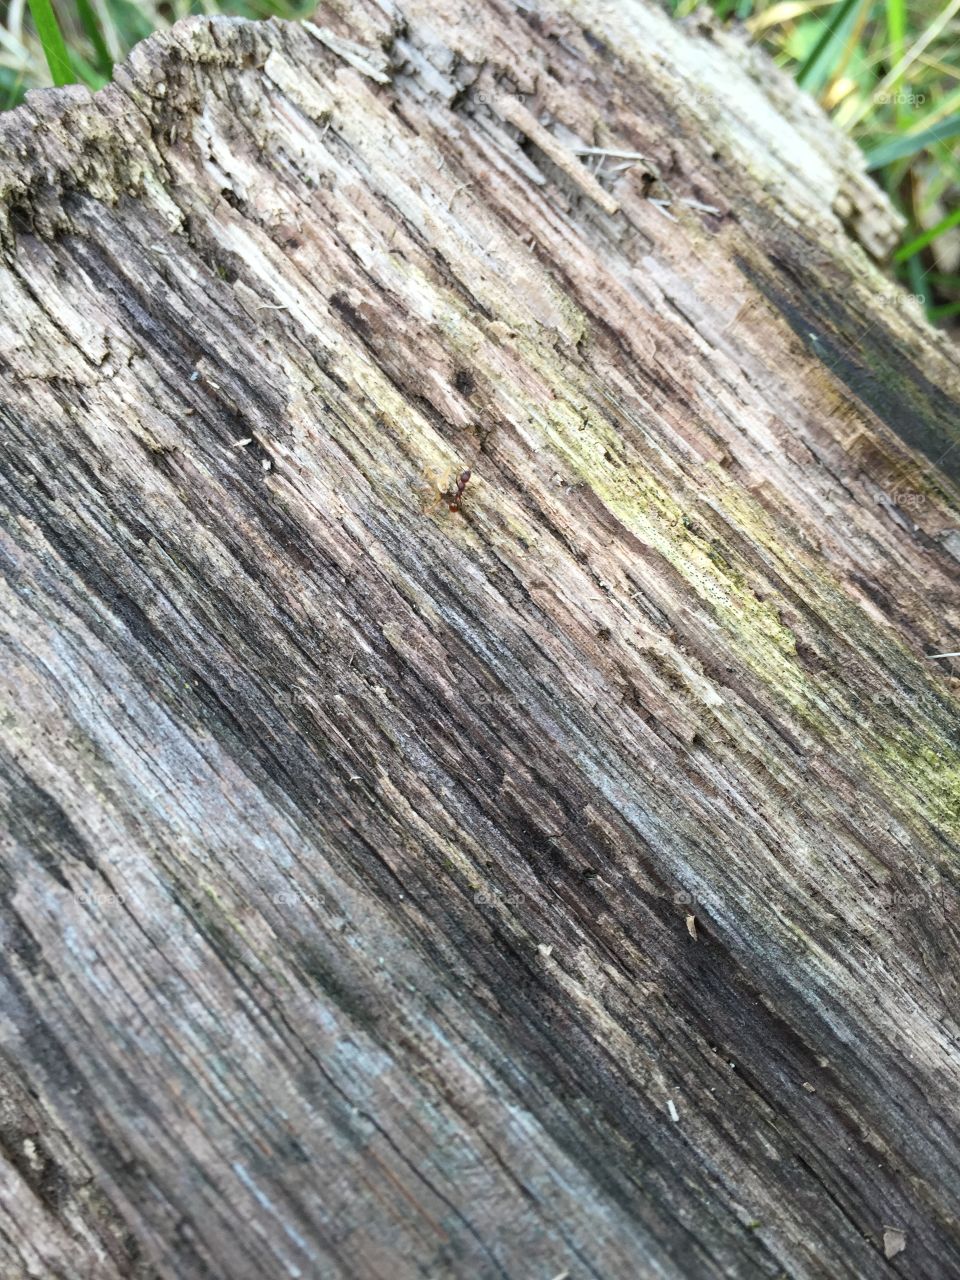 Log wood grain pattern